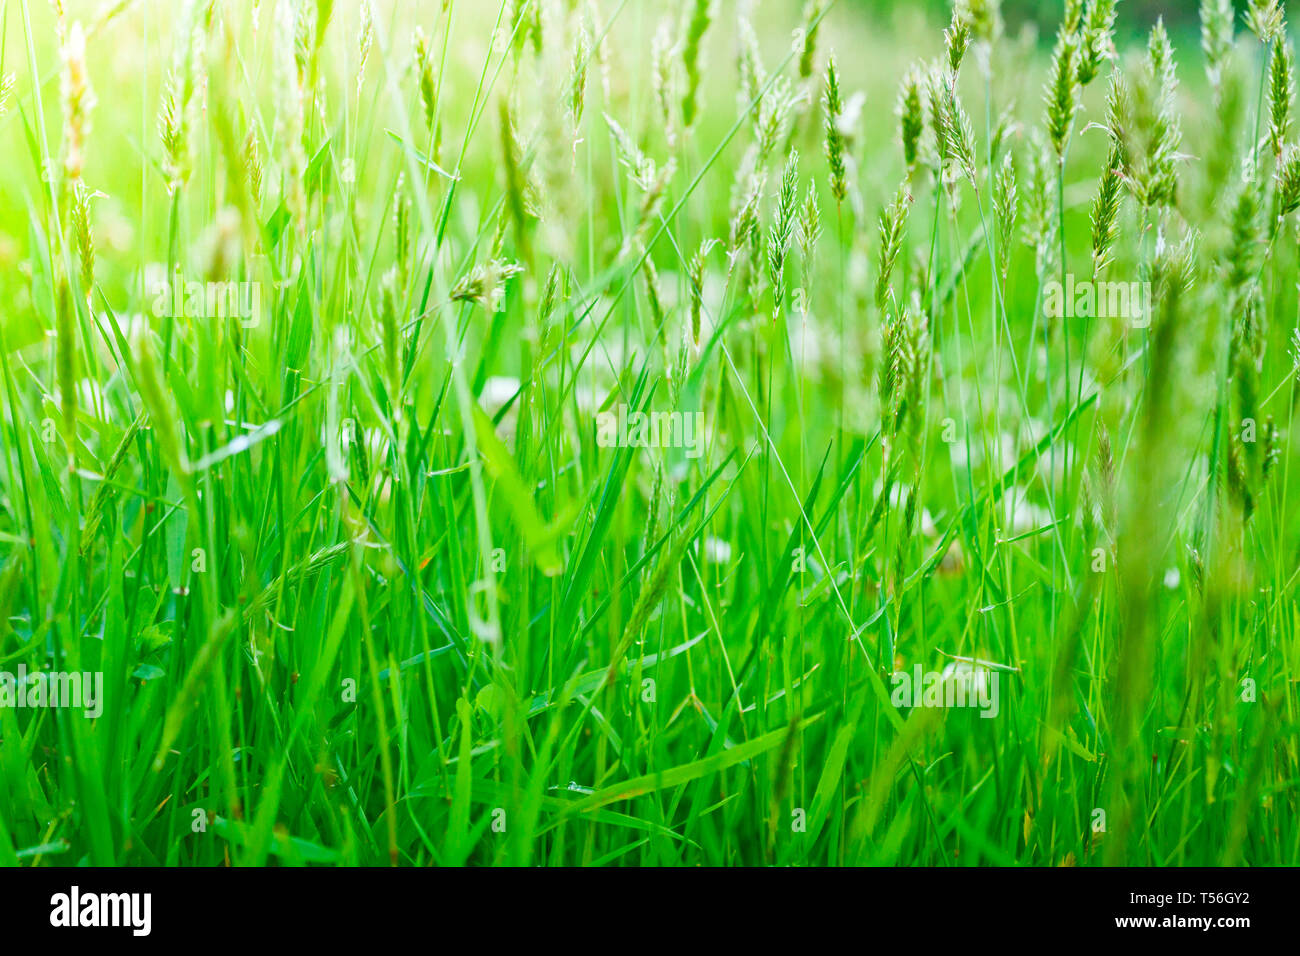 Lush, fresh green grass background Stock Photo